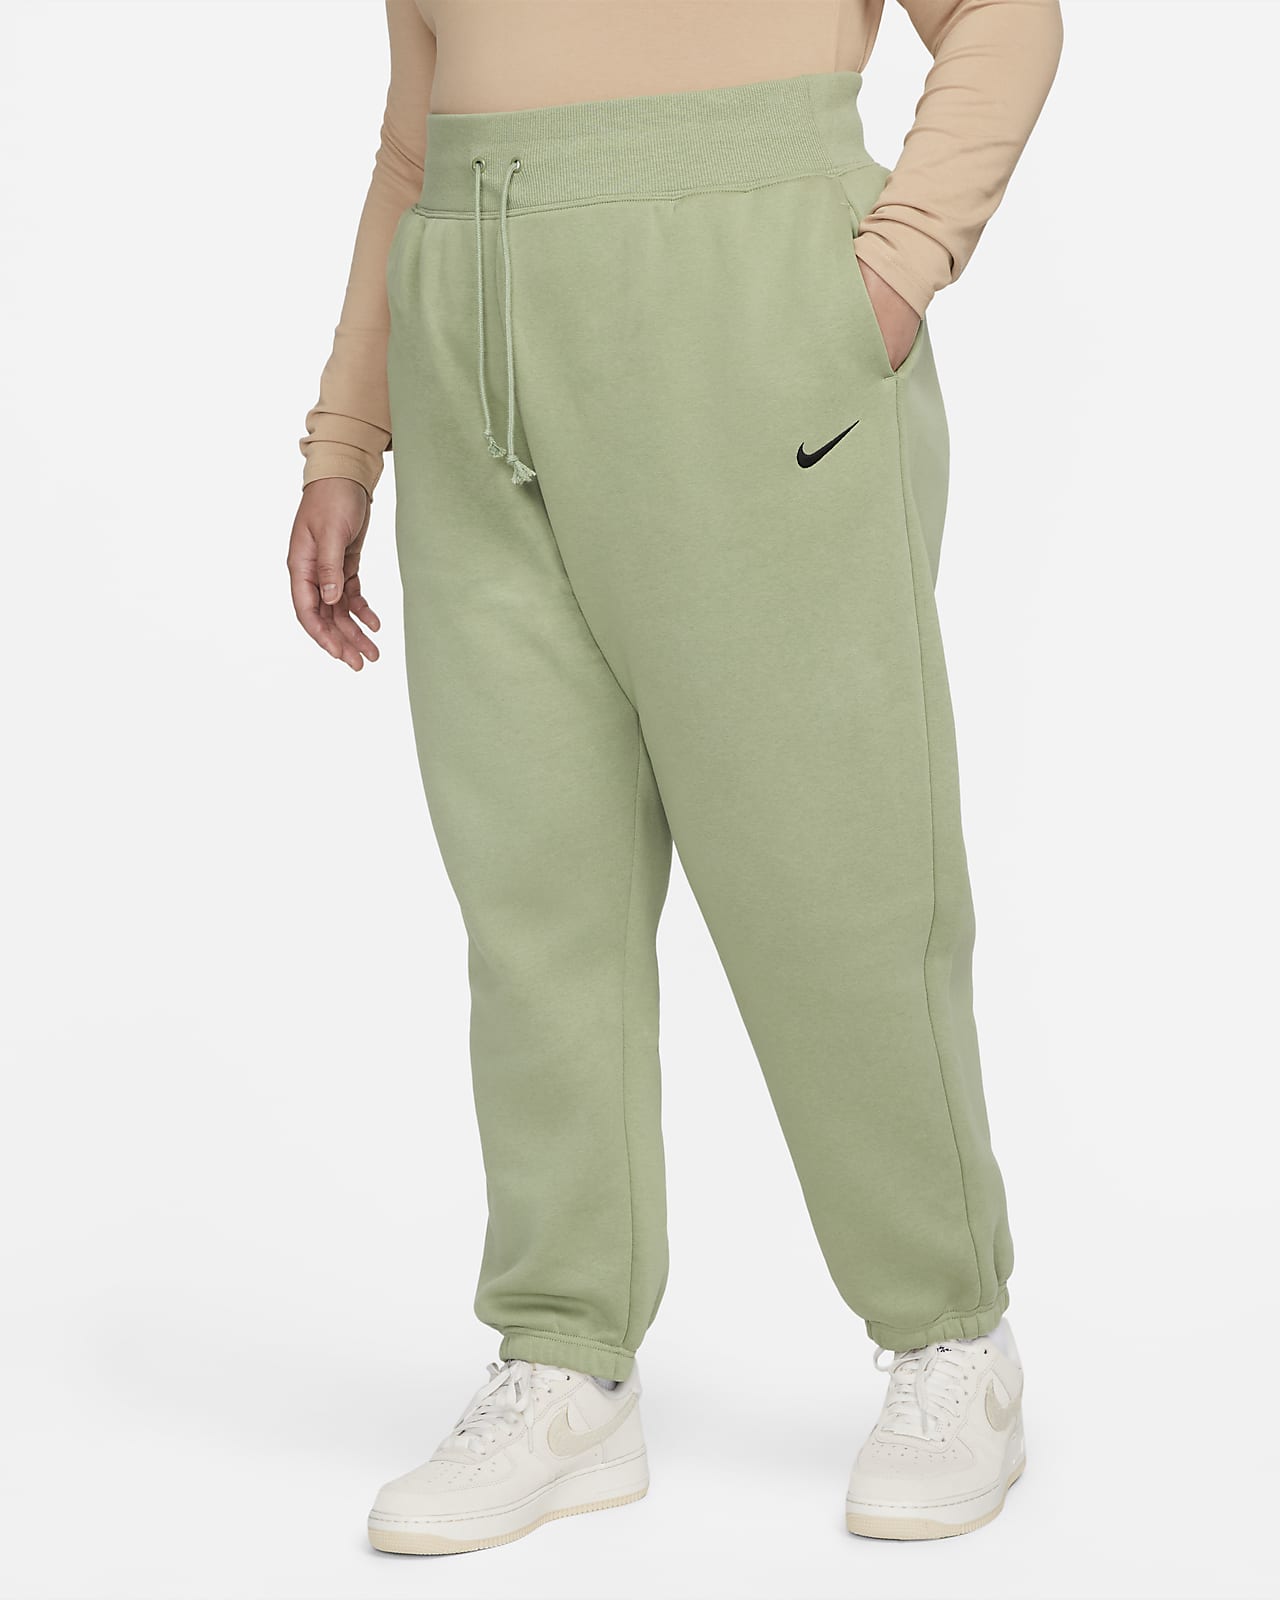 Pants — OnTrack Sportswear | Custom Design Sportswear and Uniform's |  Melbourne, Australia